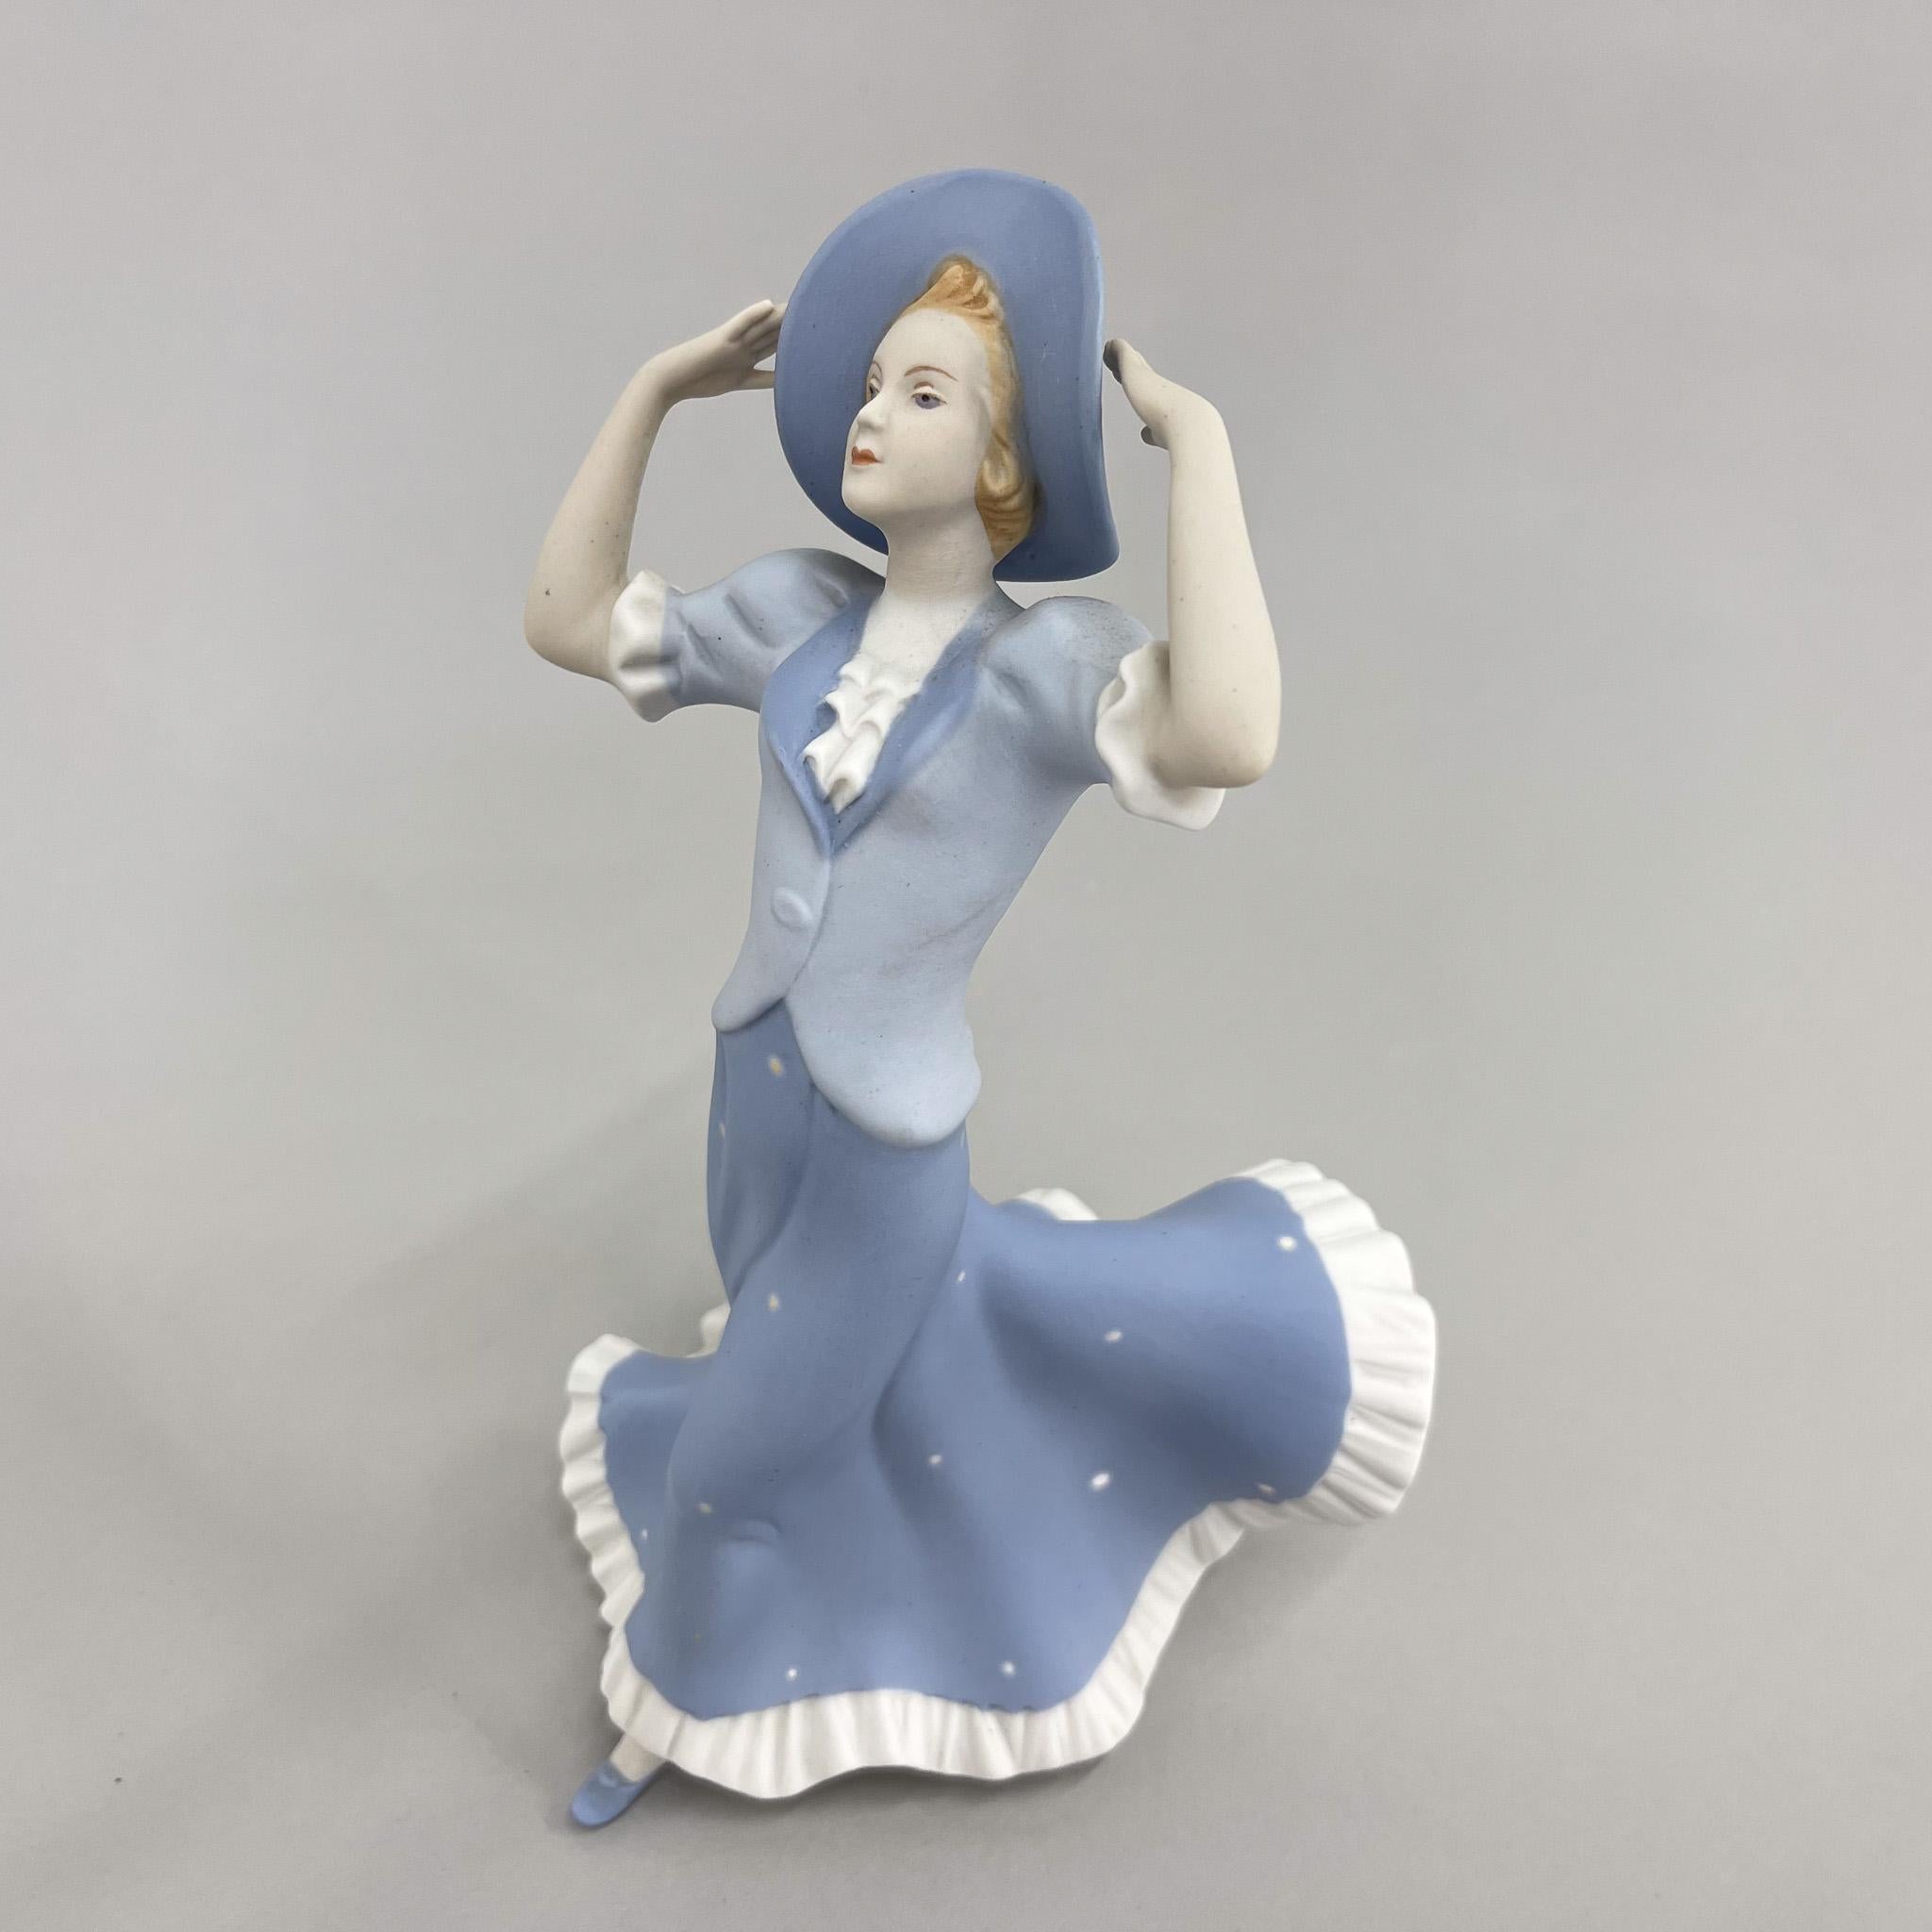 1970s Porcelain Sculpture 'Lady with Hat' by Royal Dux For Sale 7